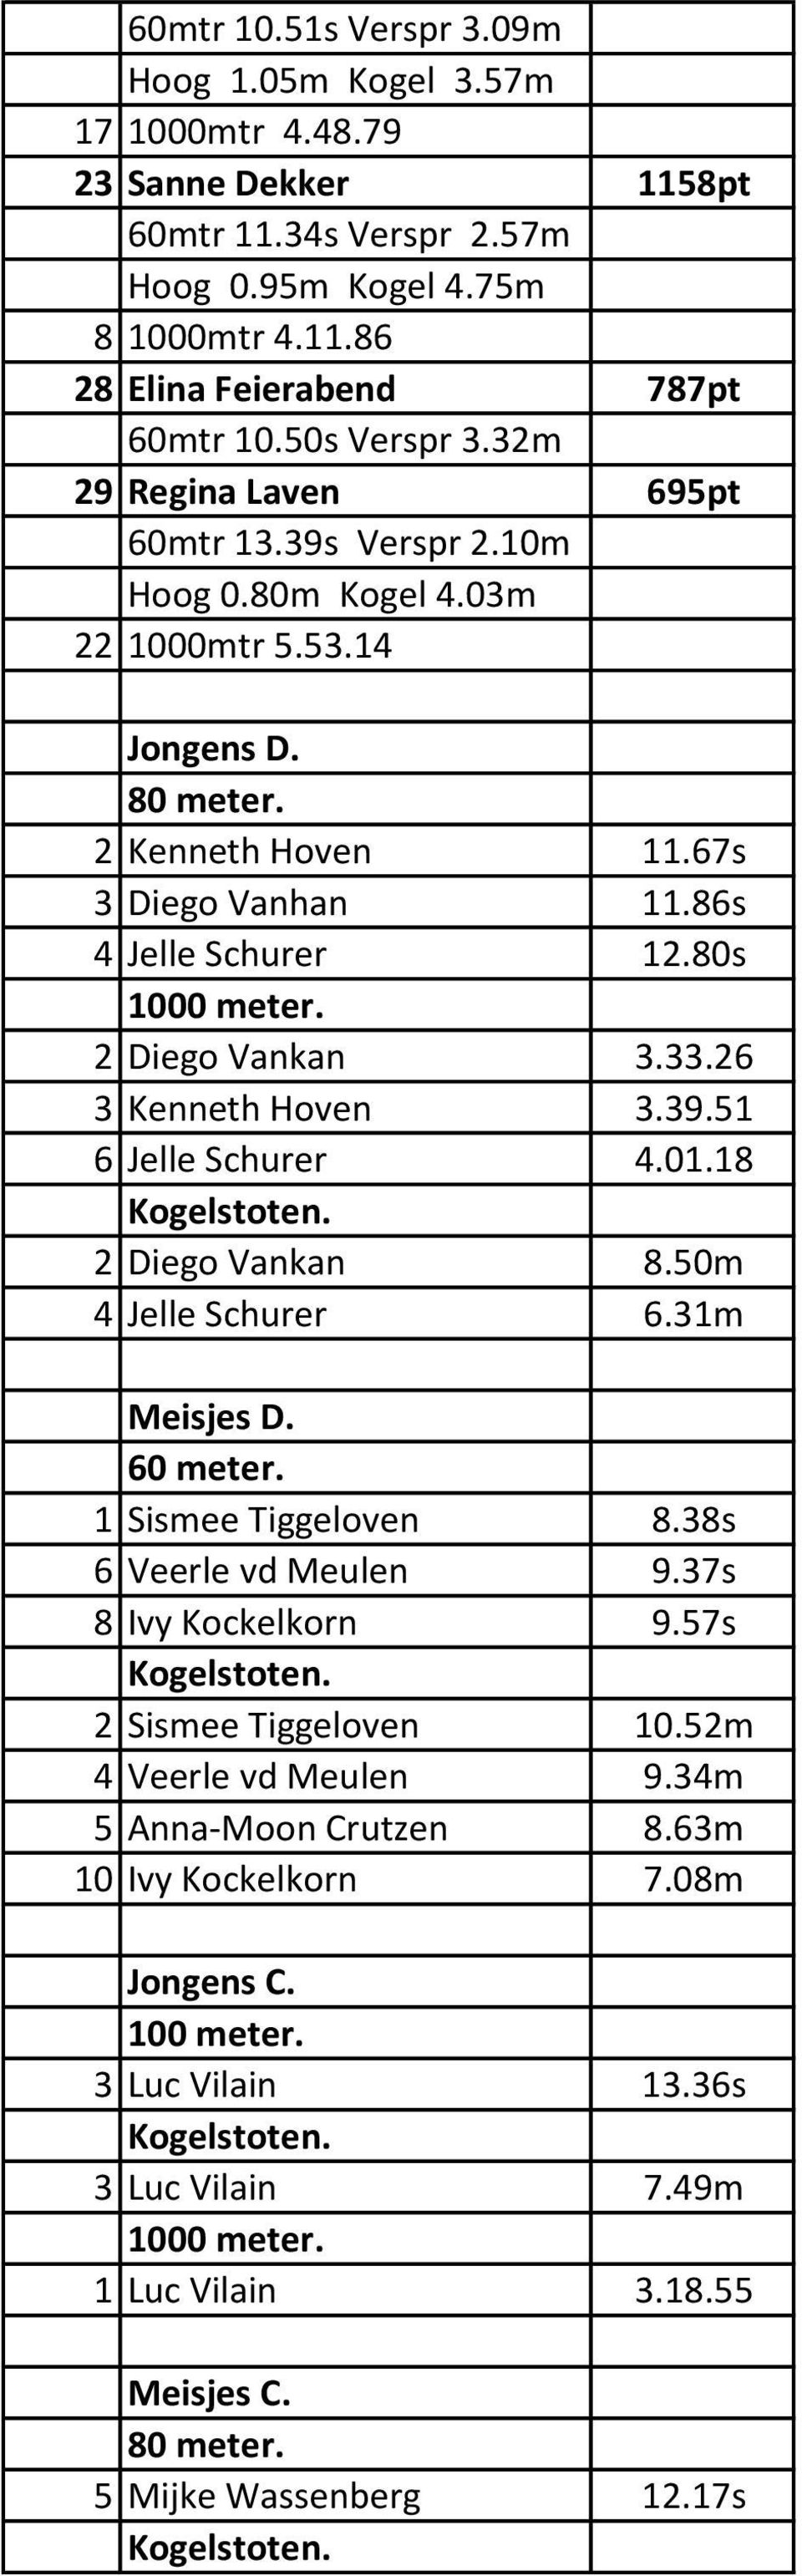 80s 1000 meter. 2 Diego Vankan 3.33.26 3 Kenneth Hoven 3.39.51 6 Jelle Schurer 4.01.18 2 Diego Vankan 8.50m 4 Jelle Schurer 6.31m Meisjes D. 60 meter. 1 Sismee Tiggeloven 8.38s 6 Veerle vd Meulen 9.